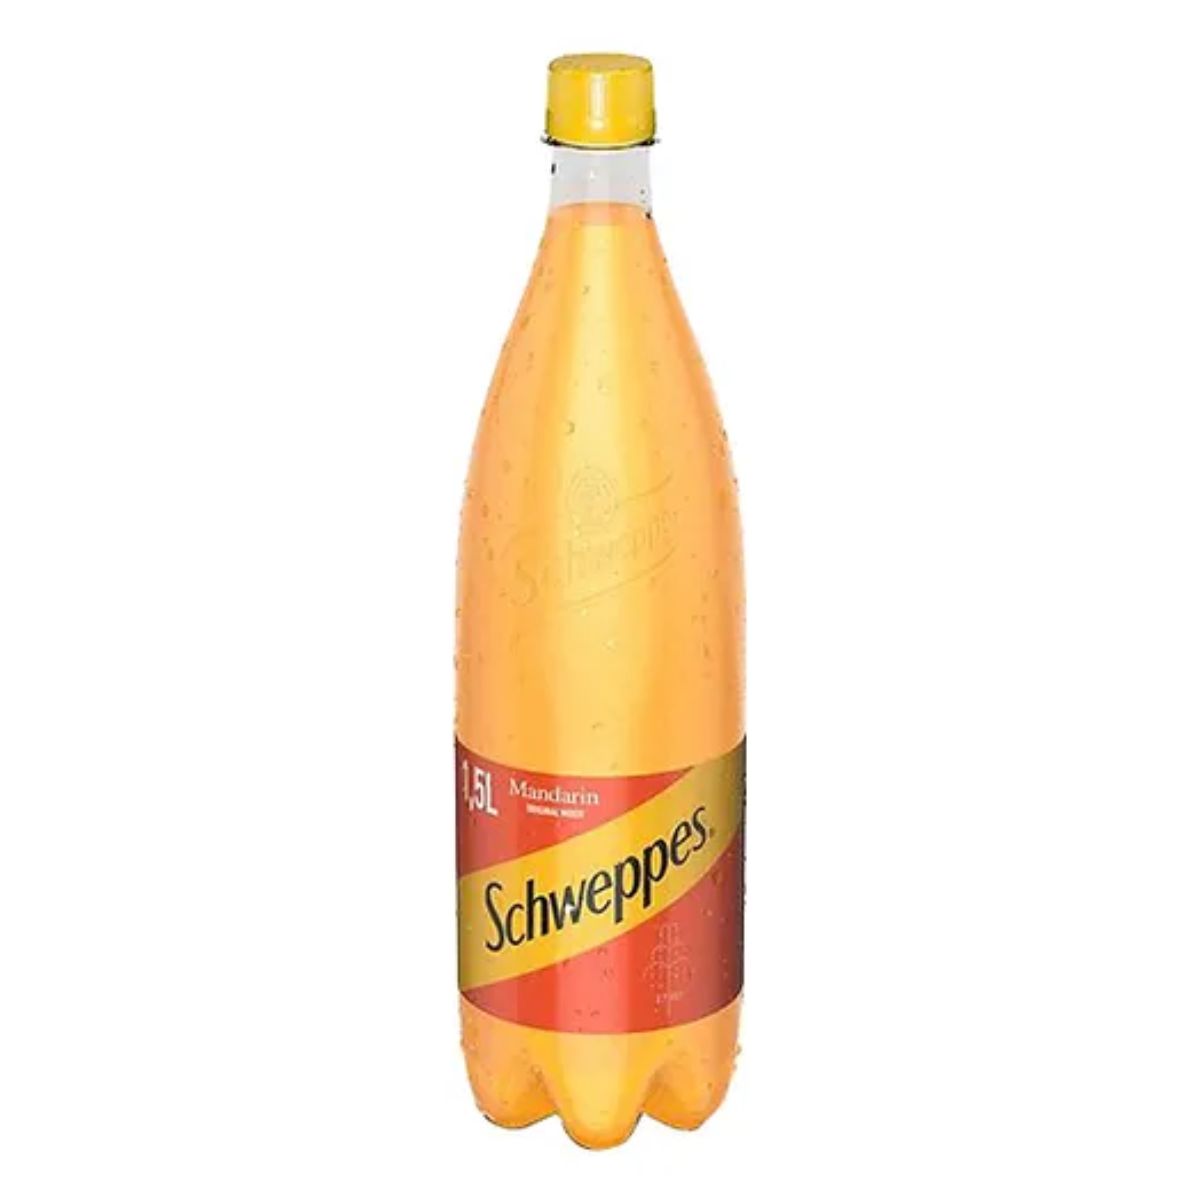 A bottle of Schweppes - Mandarin - 1.5L soda on a white background.